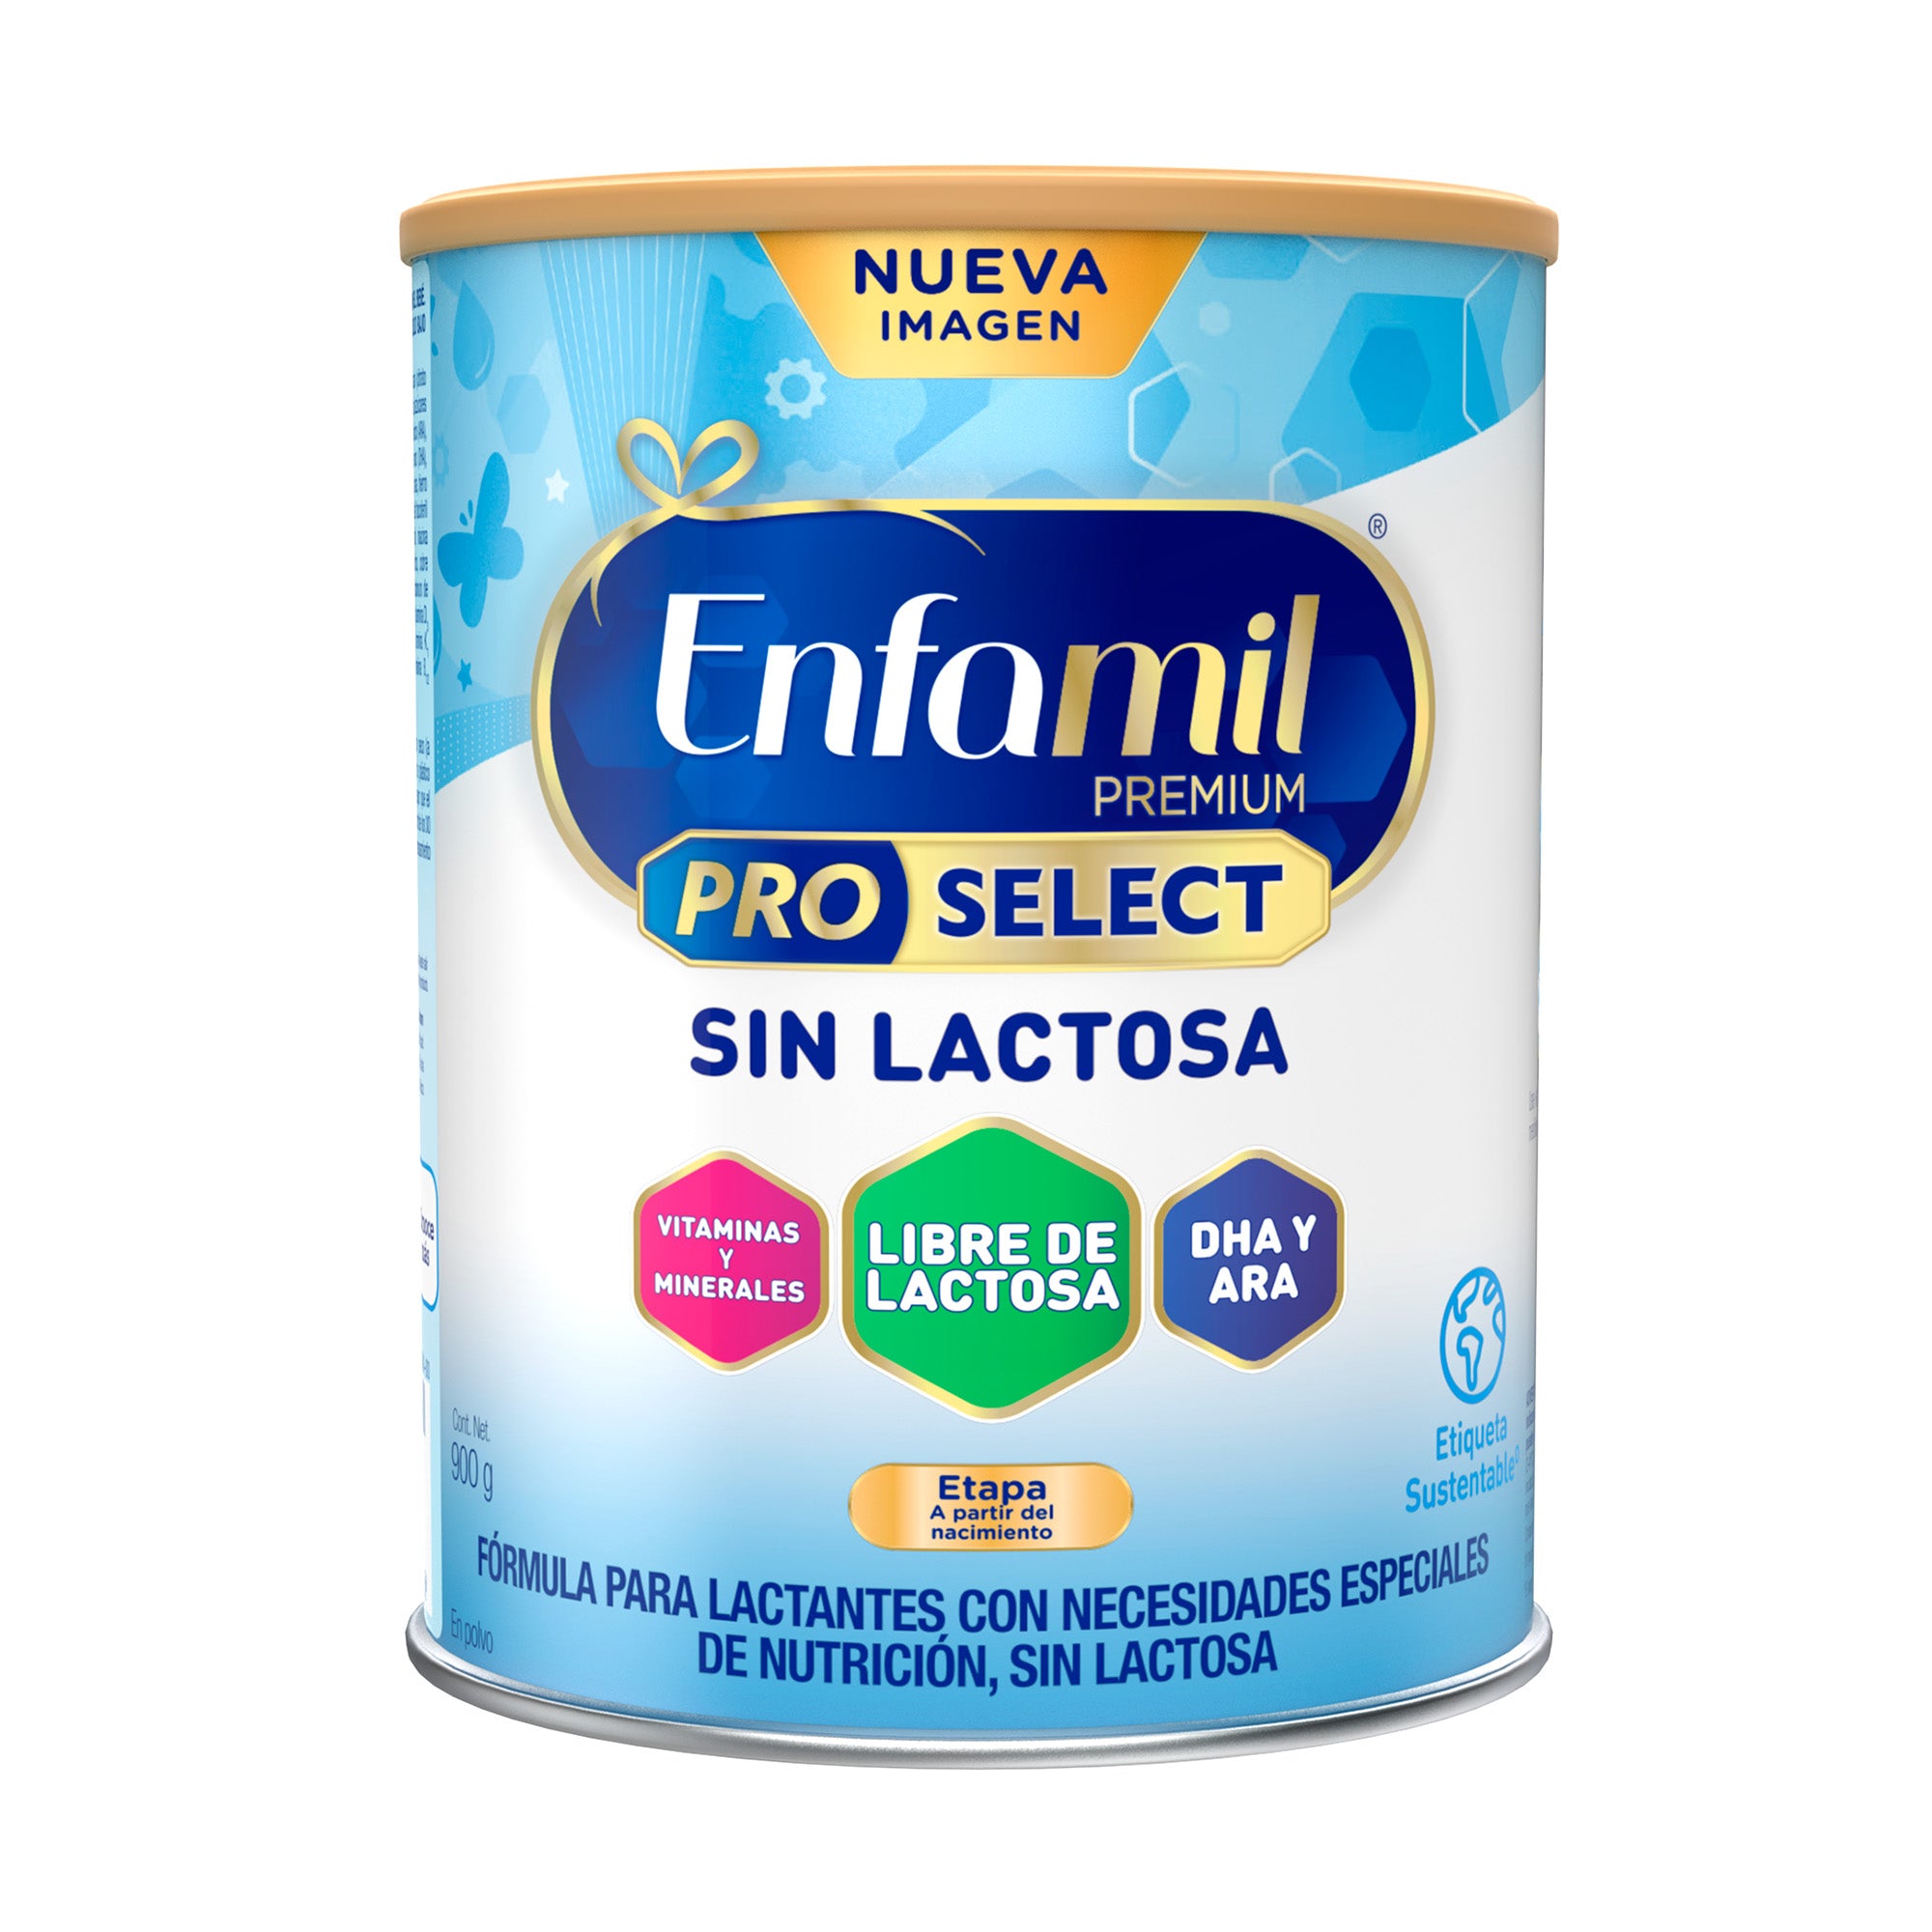 Enfamil® Premium Sin Lactosa, Lata de 900 grs.